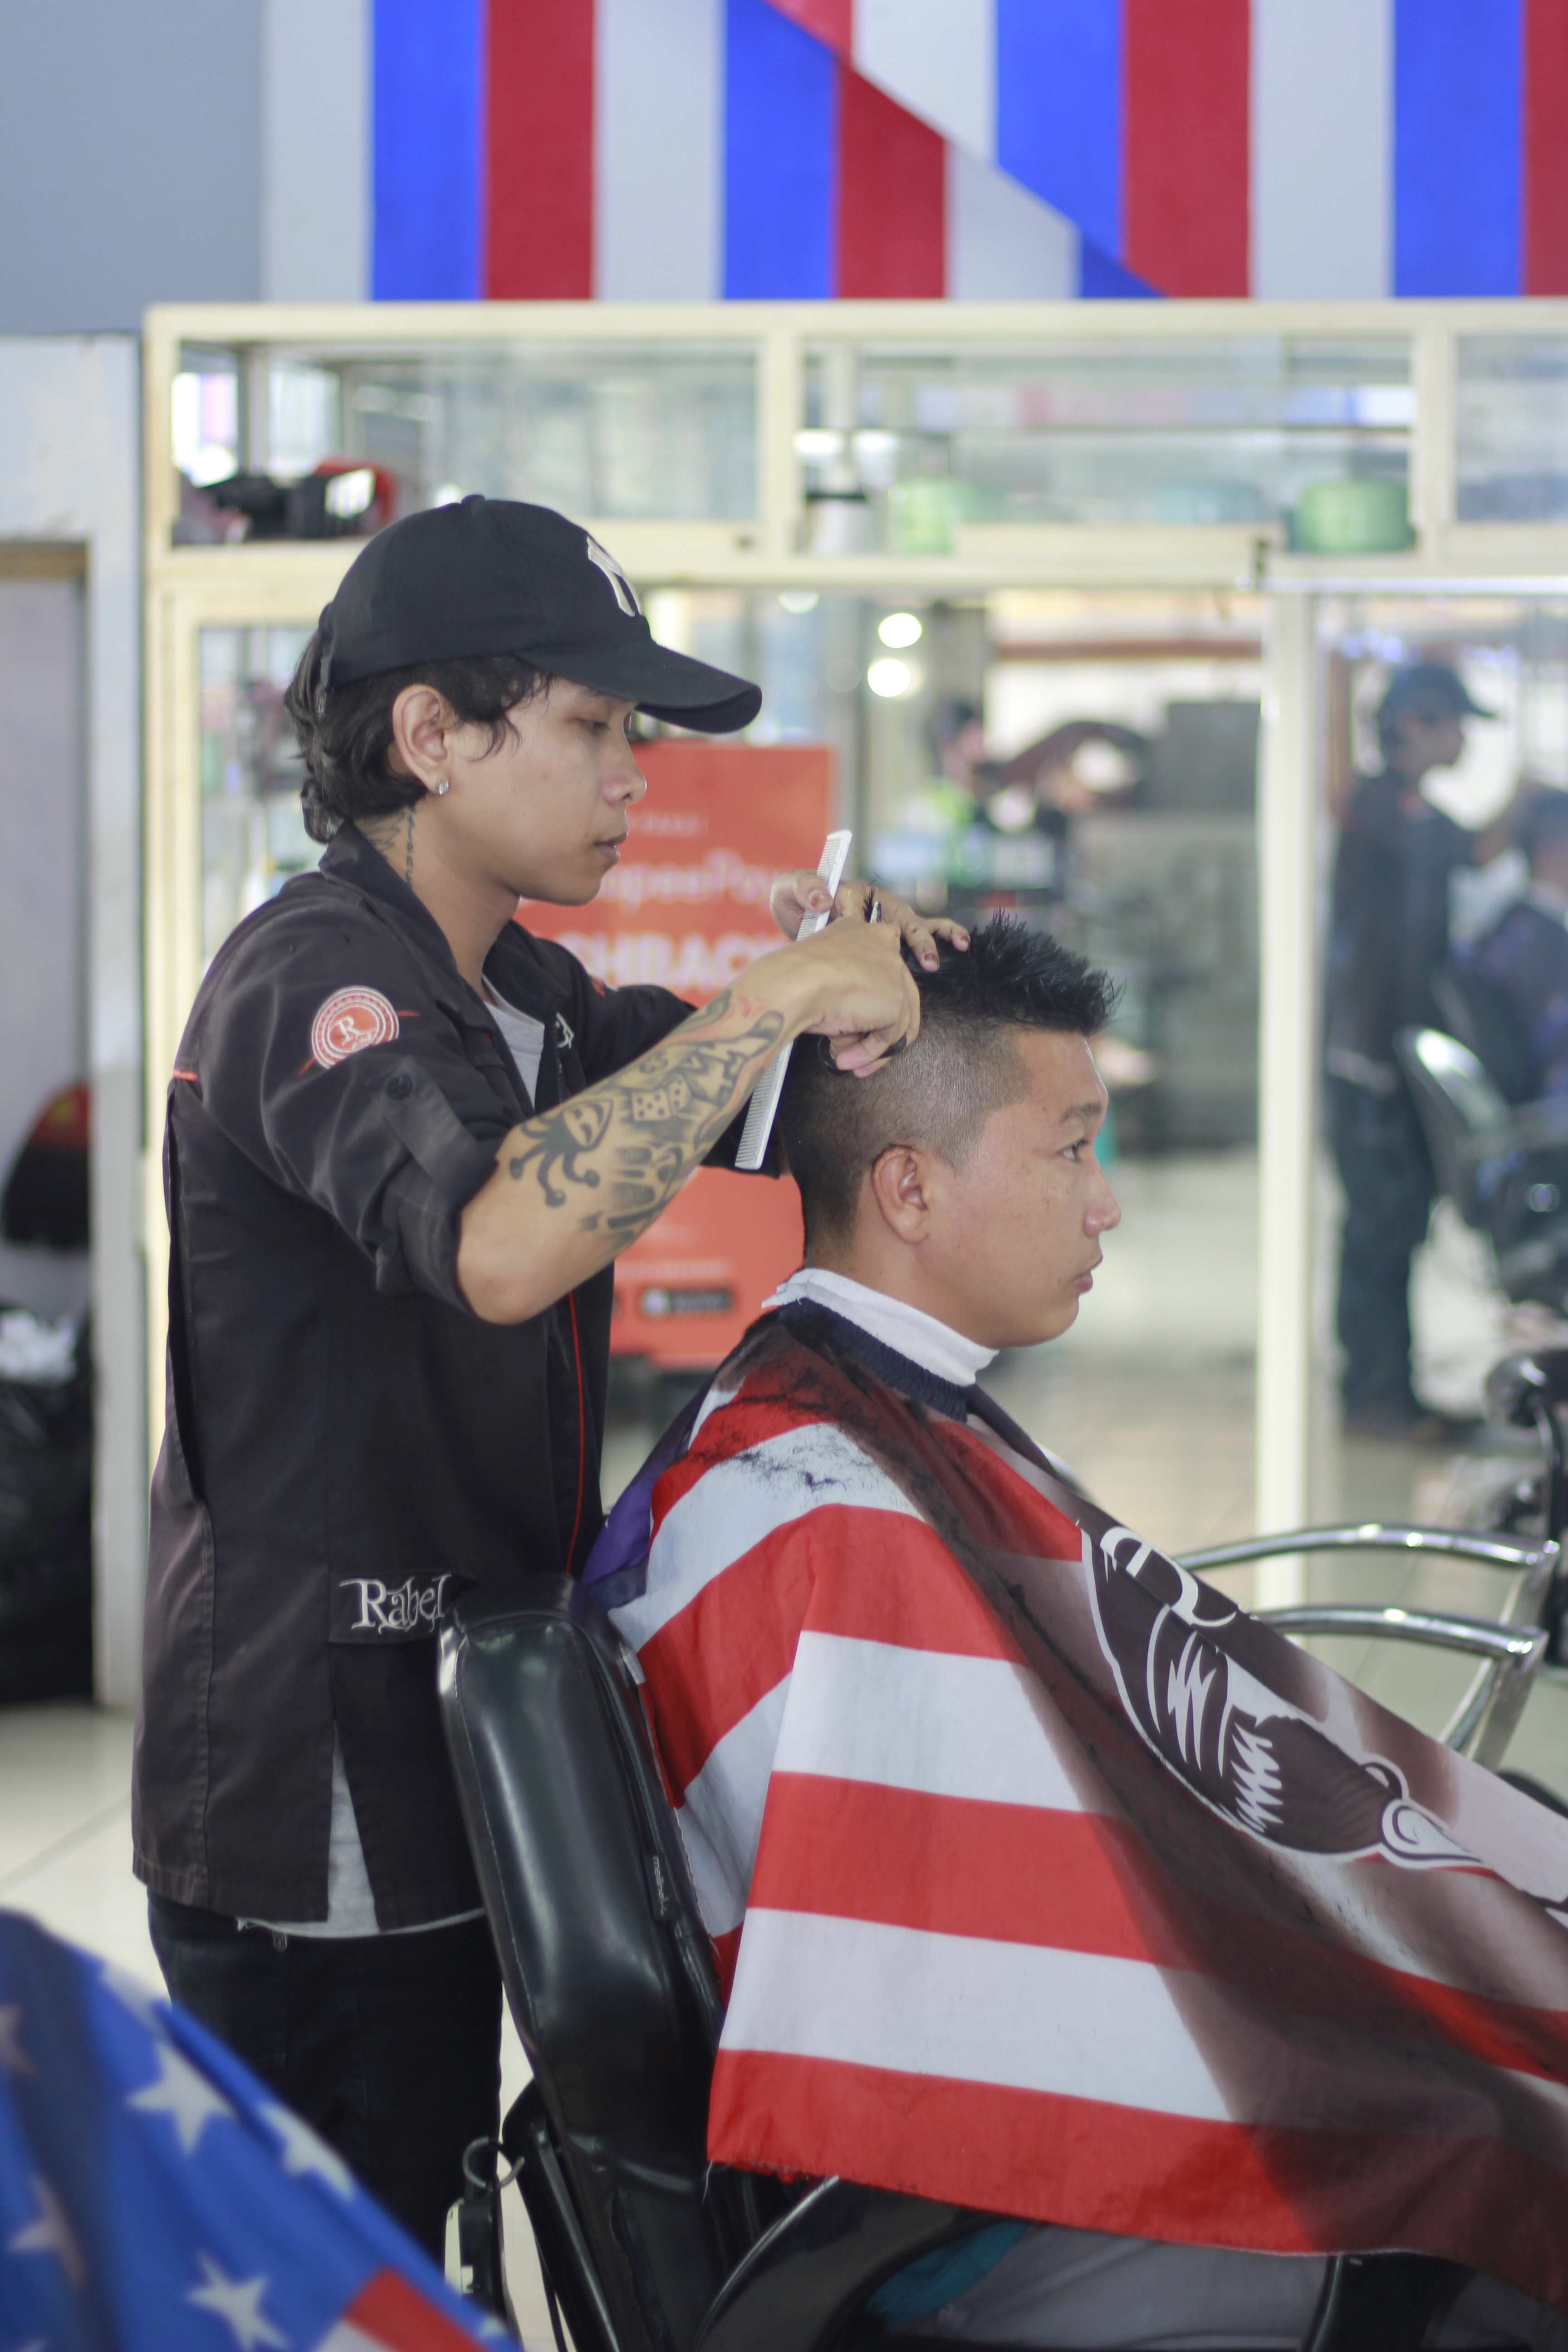 Harga Pangkas Rambut Di Jl. Tumenggung Suryo Profesional